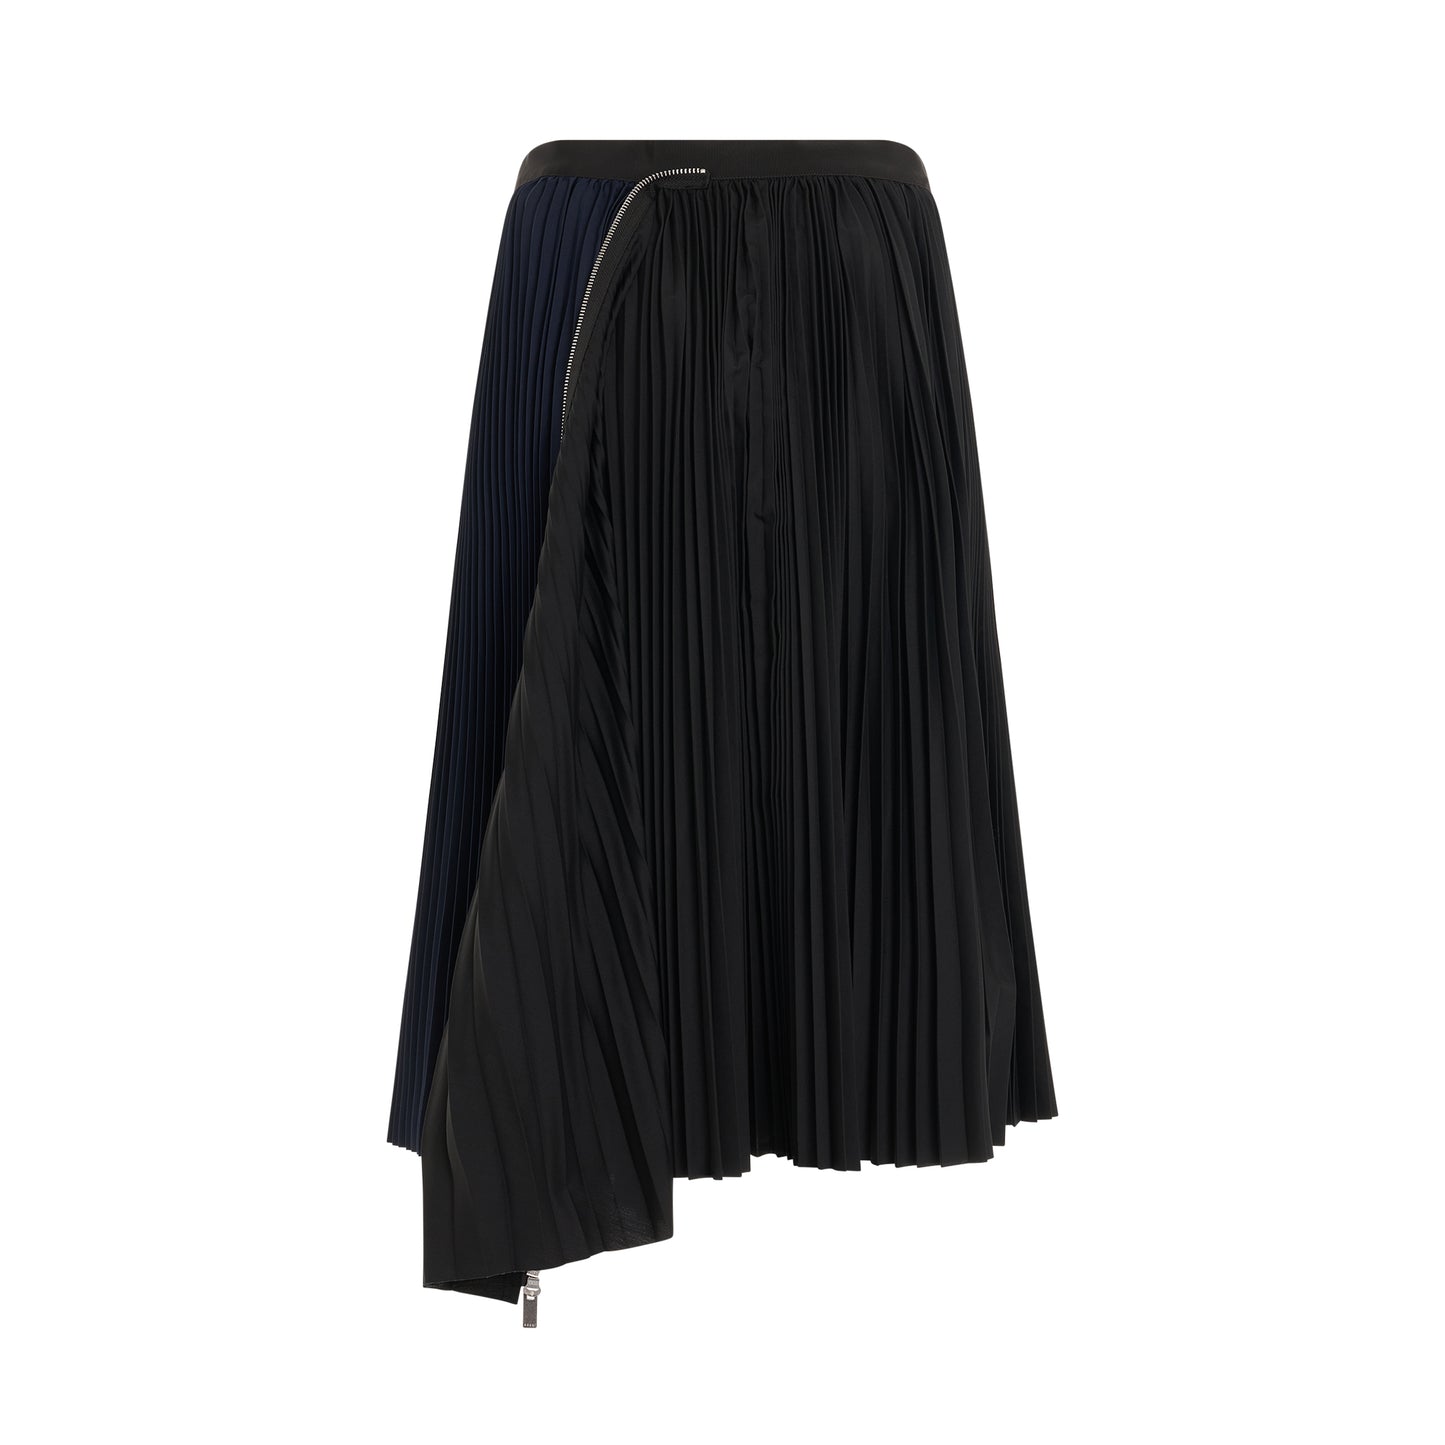 Cotton Zipper Skirt in Black